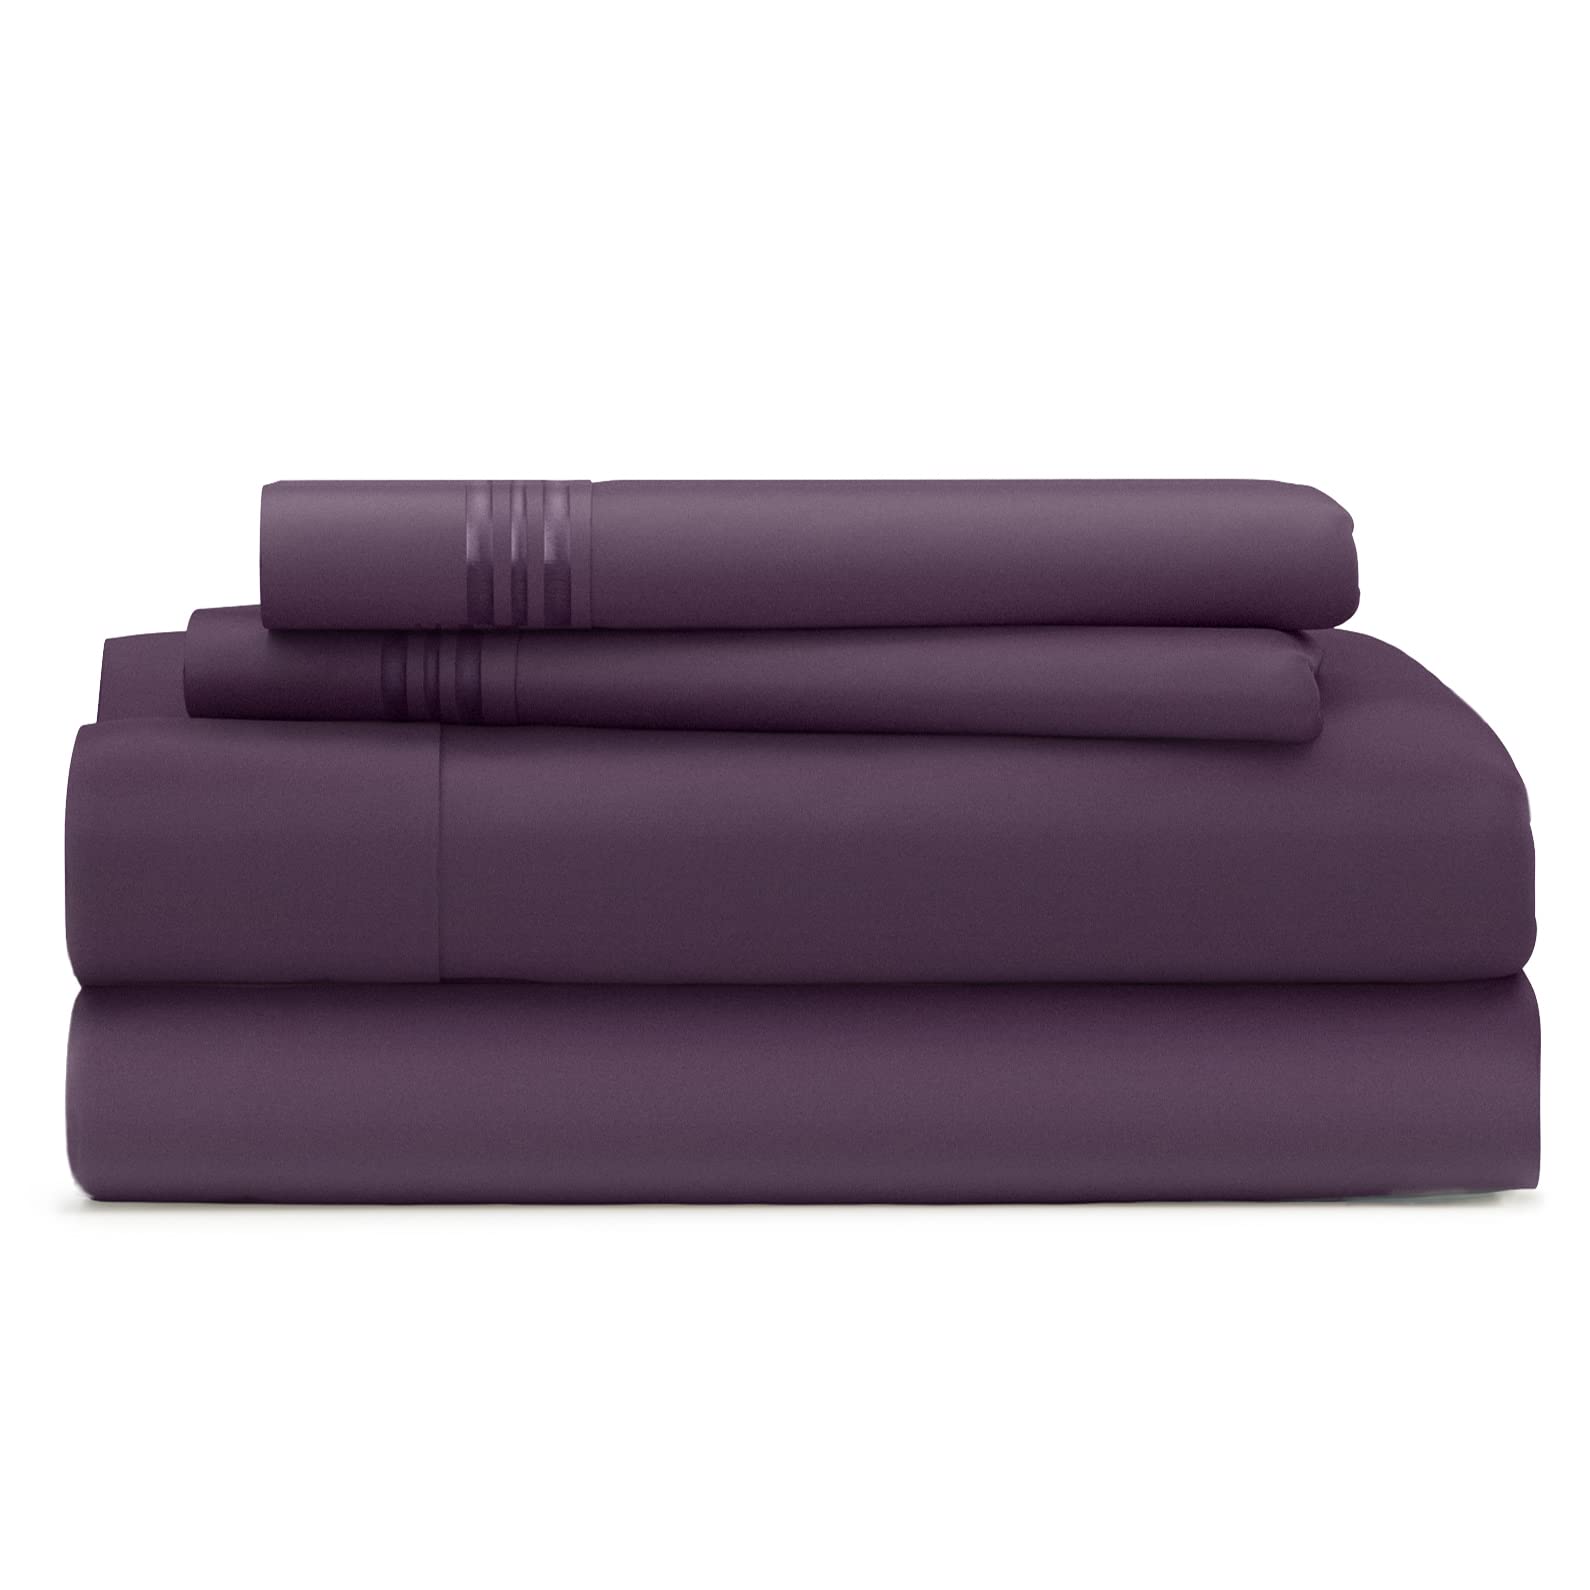 Book Cover King Size Sheet Set - Purple King Bed Sheets - Deep Pocket - Super Soft Hotel Luxury Bedding - Hypoallergenic, Cool & Wrinkle Resistant - Bedsheets - 4 Piece Sheet-Set (King, Purple)